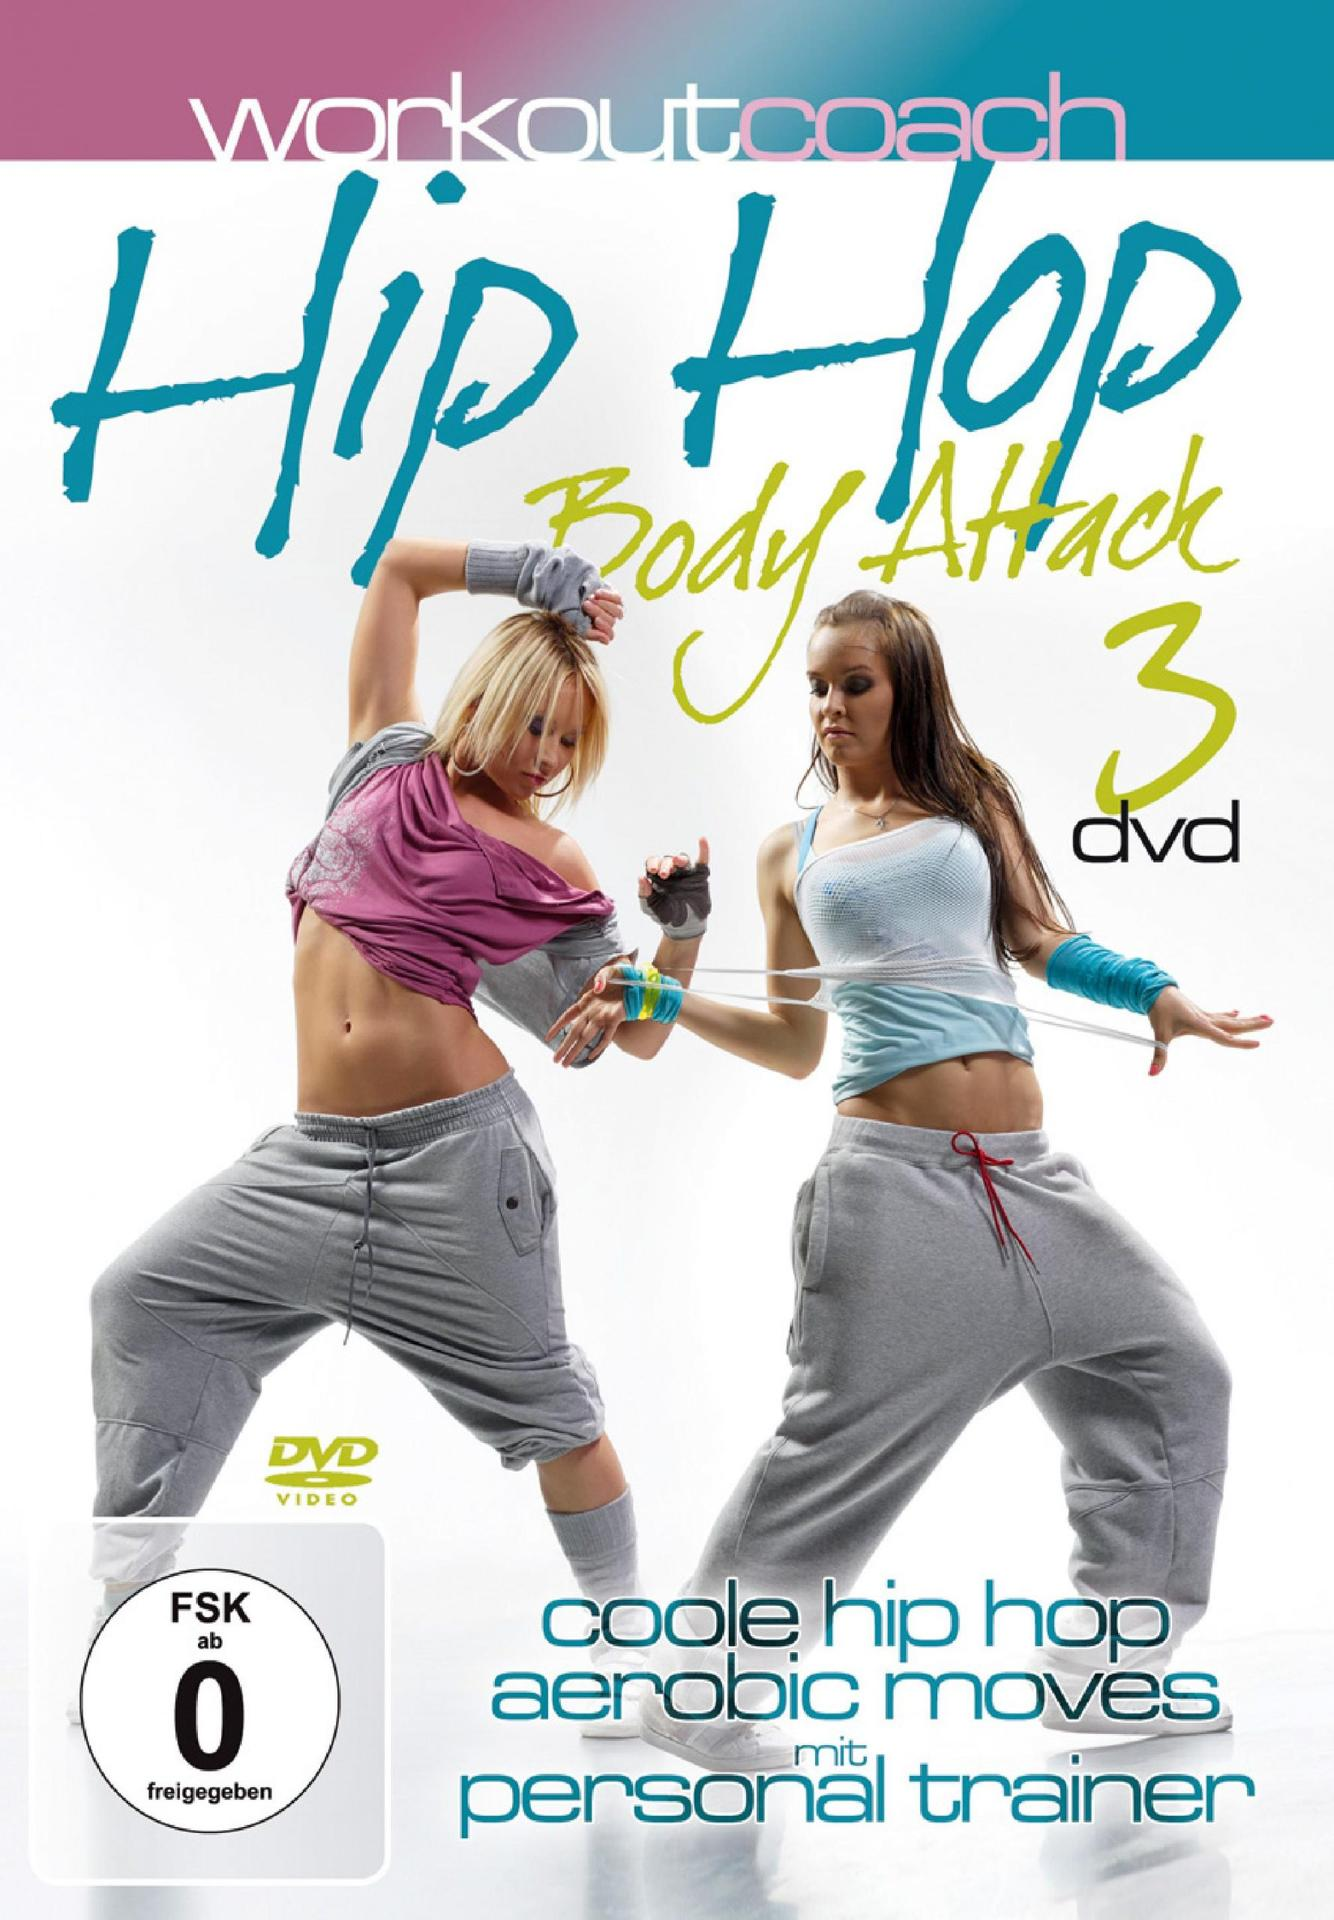 Workout Coach: Hip Hop Attack Body DVD